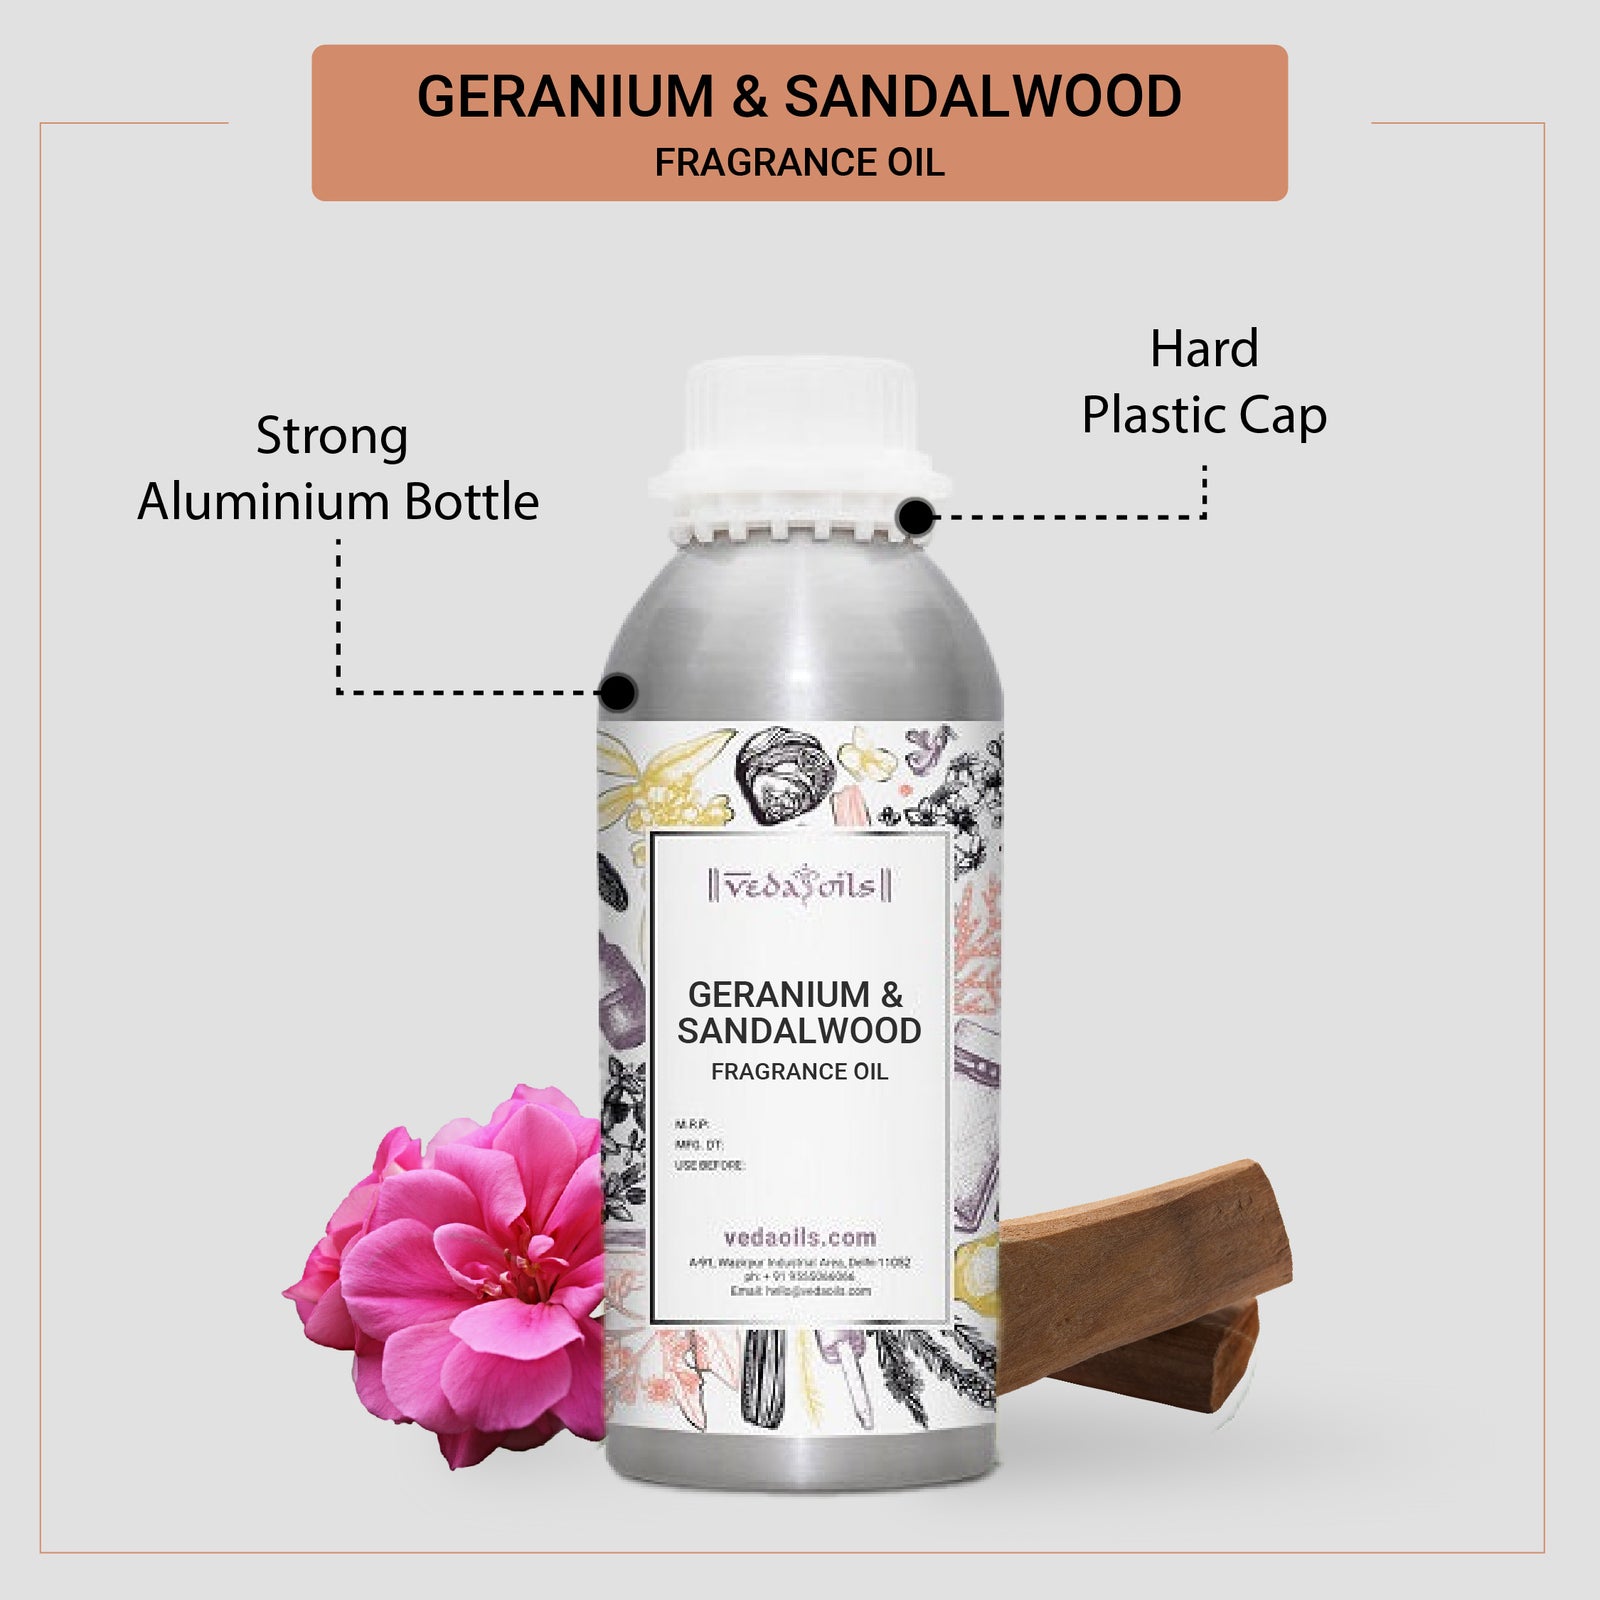 Geranium & Sandalwood Fragrance Oil